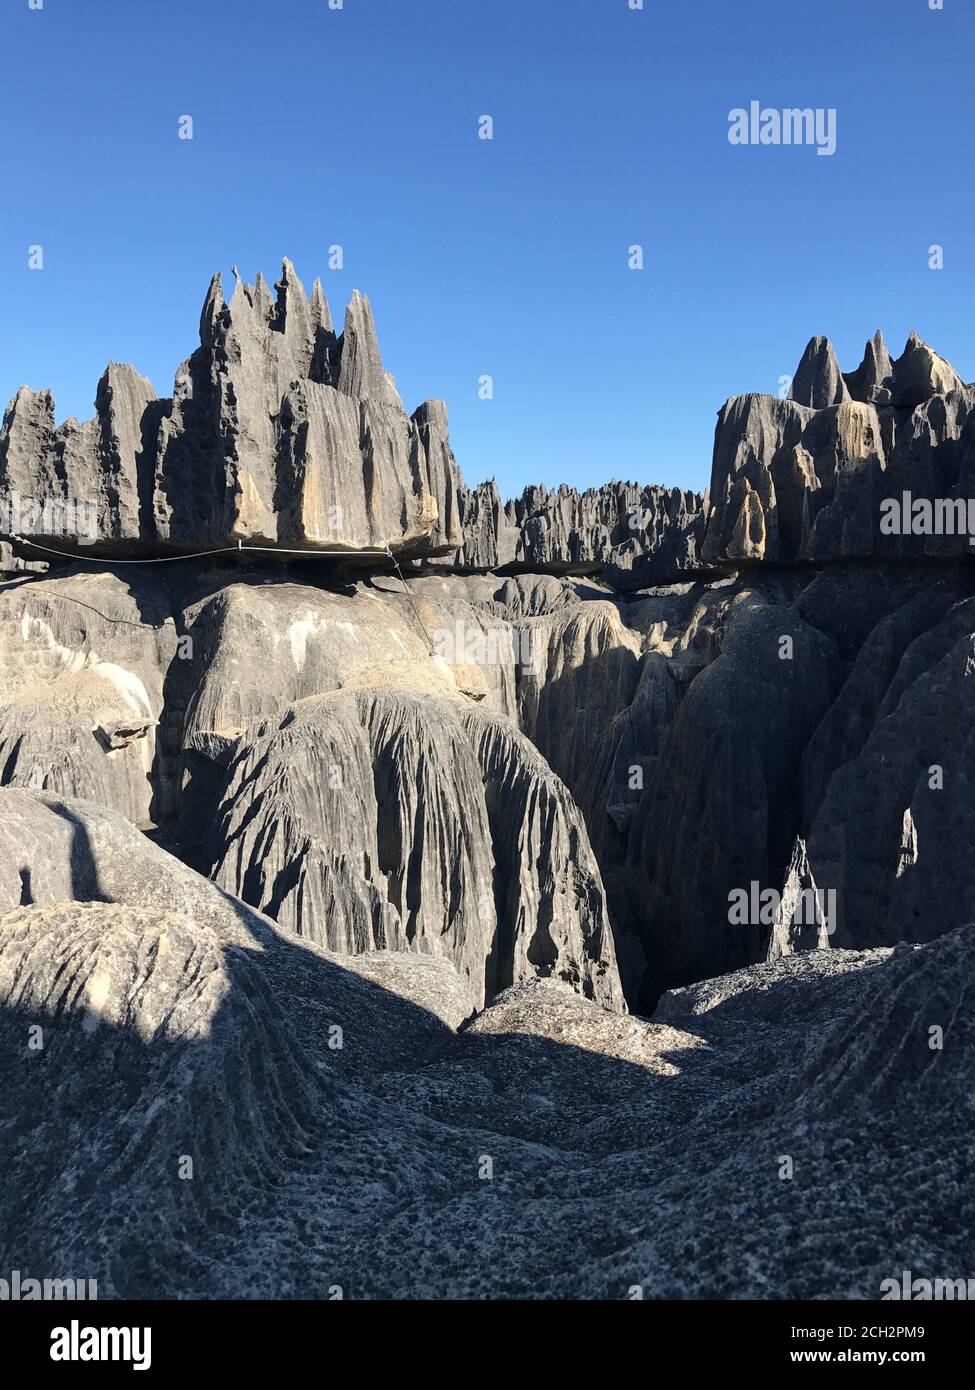 Tsingy de Bemaraha Naturschutzgebiet in Madagaskar. Unglaubliche Landschaft des Nationalparks Tsingy. Blick auf Stone Forest. Kalksteinfelsen. Felsiges Labyrinth. Stockfoto